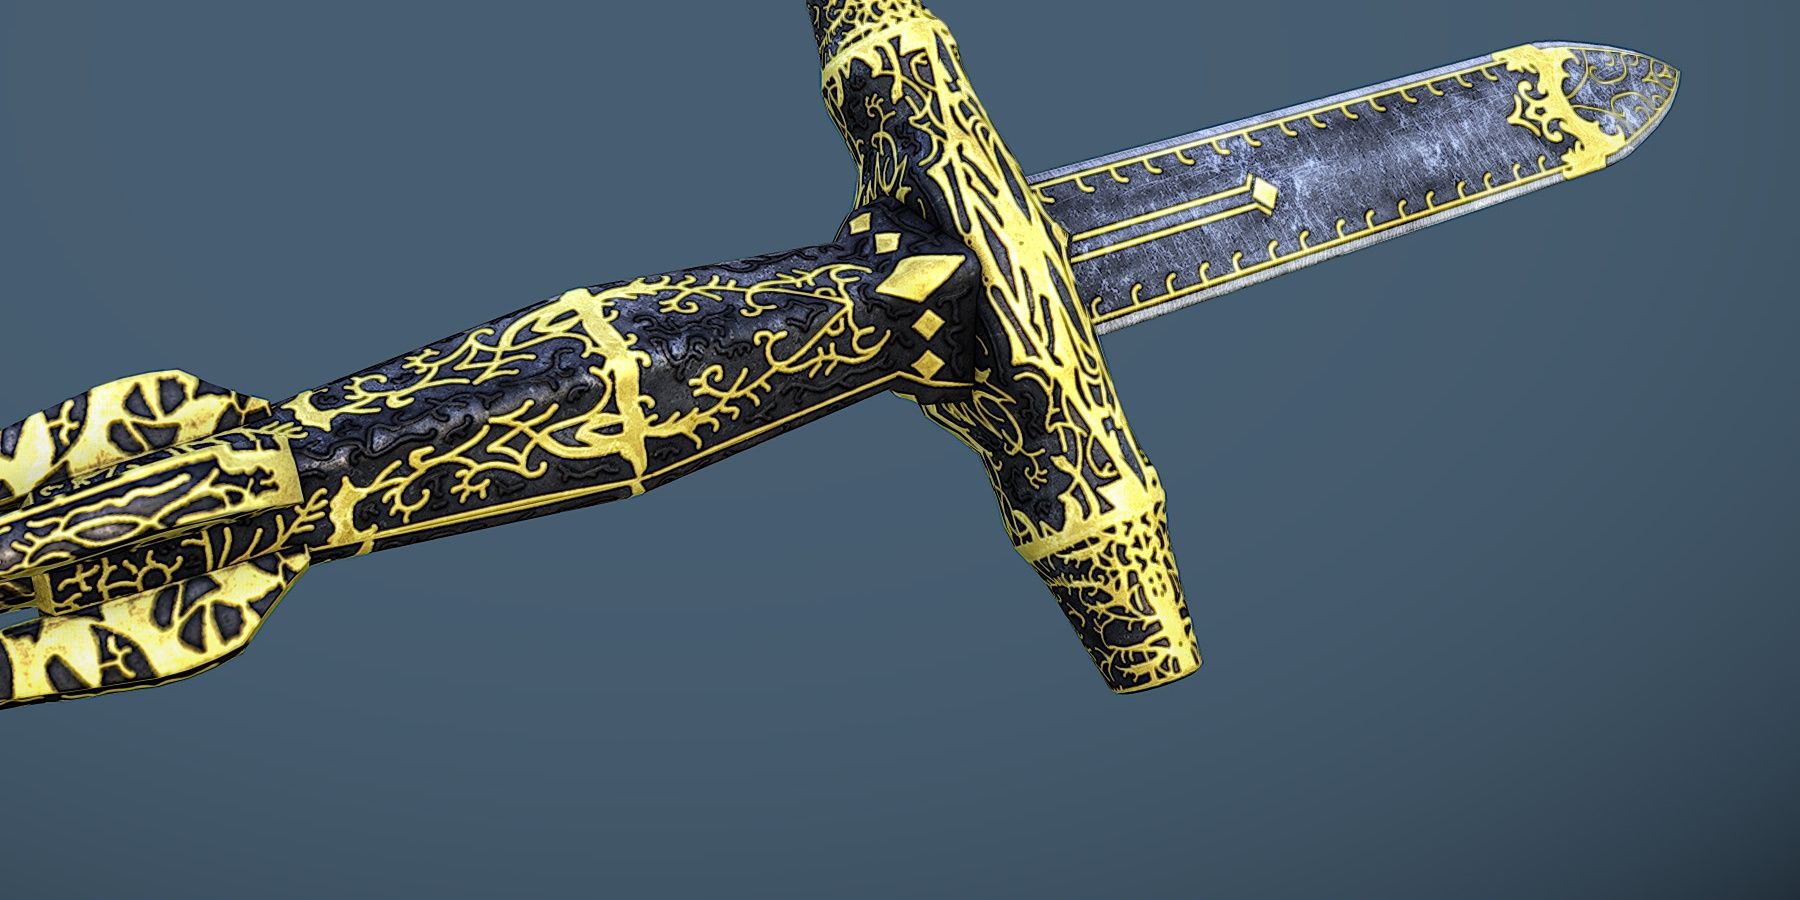 Blade of Woe resembles Oblivion's Ebony Dagger